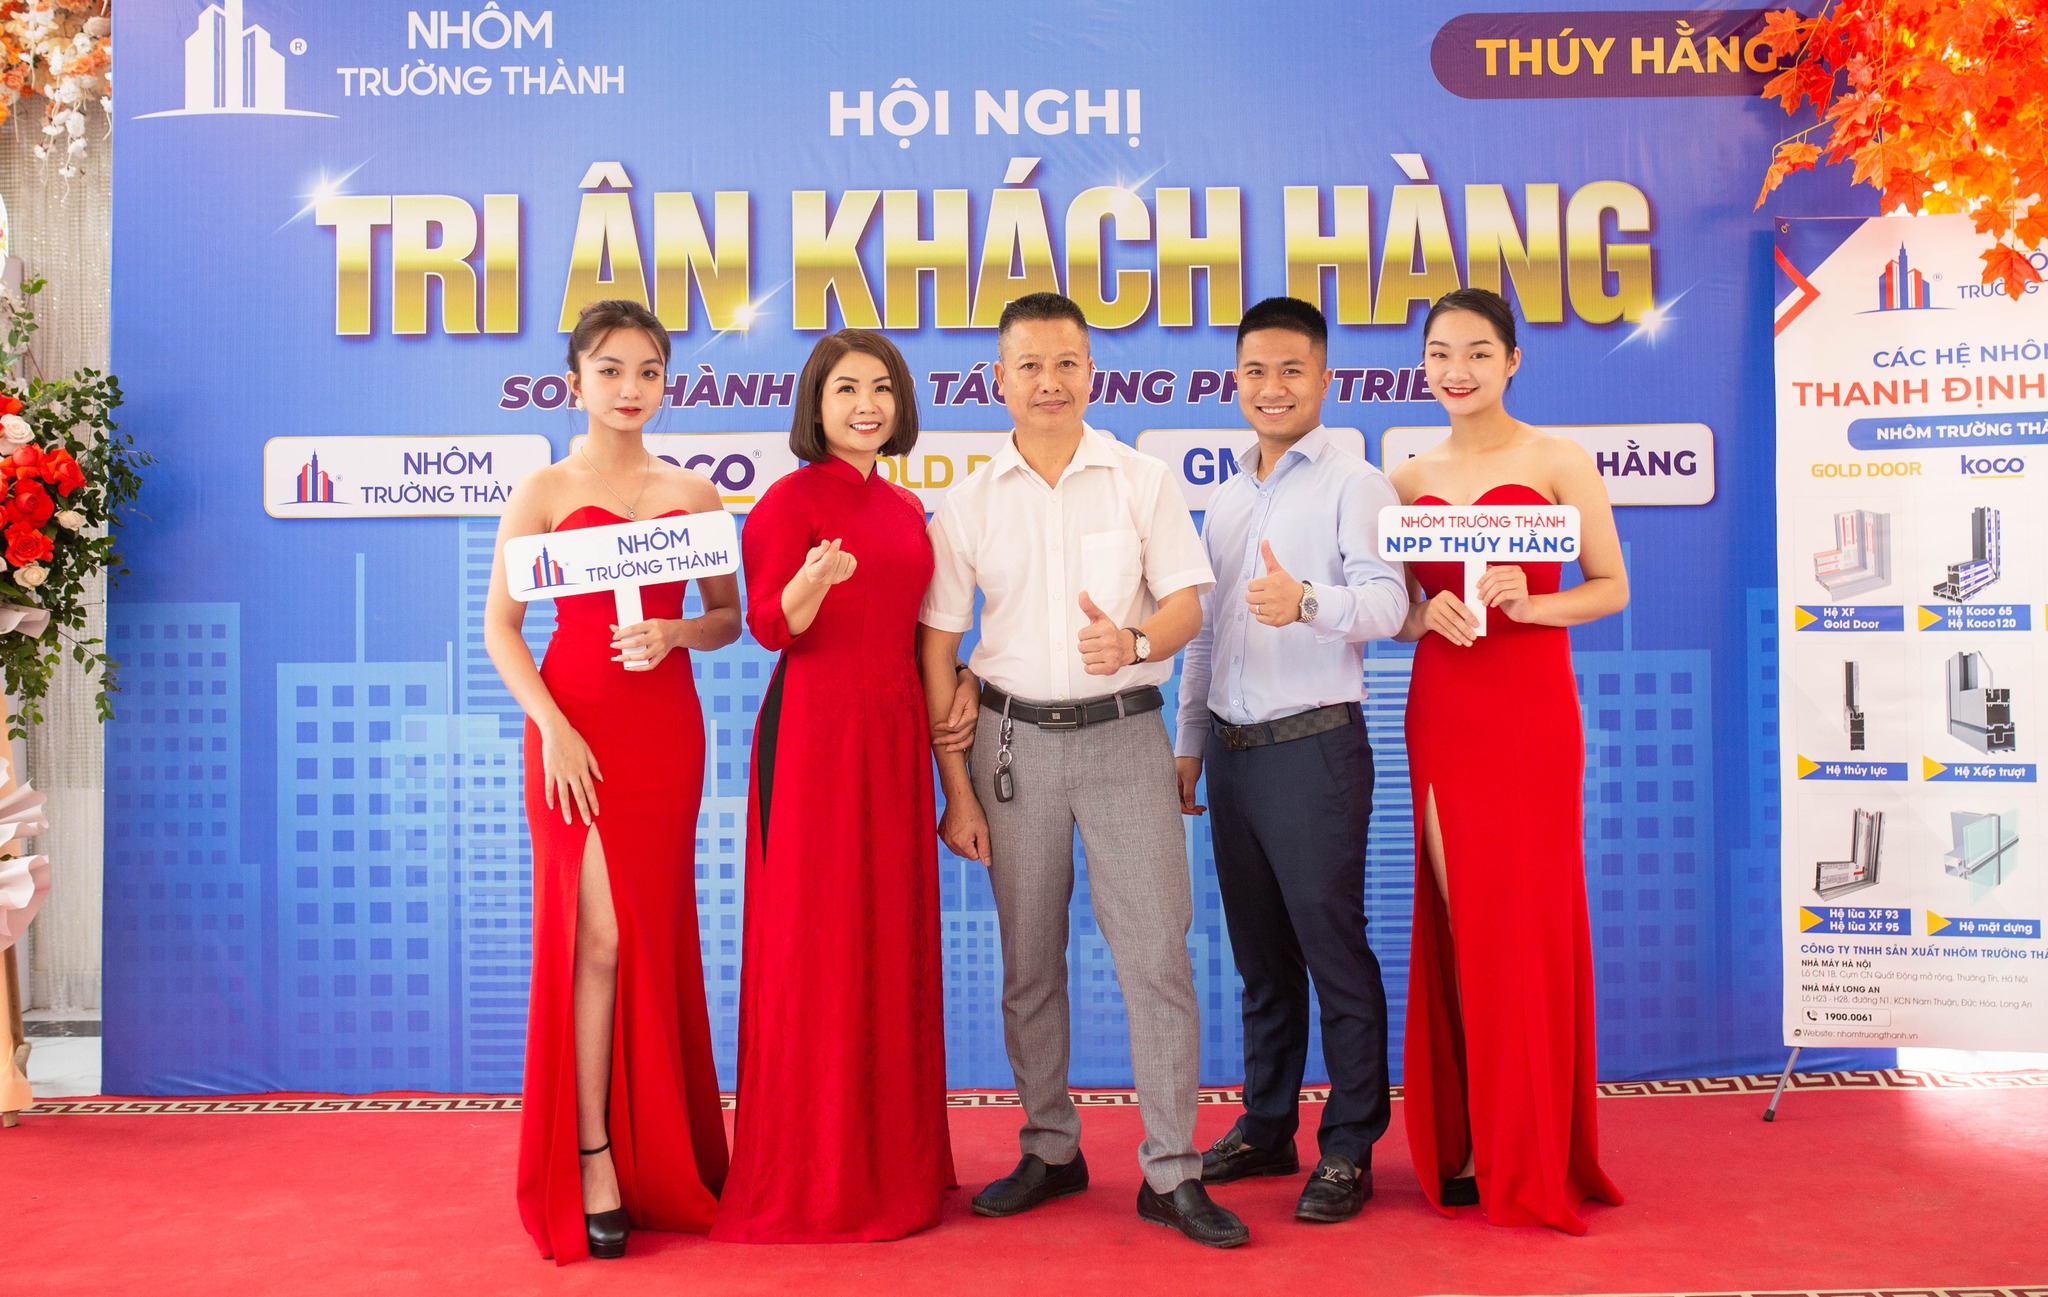 Nhom Truong Thanh Tri An Nha Pp Thuy Hang